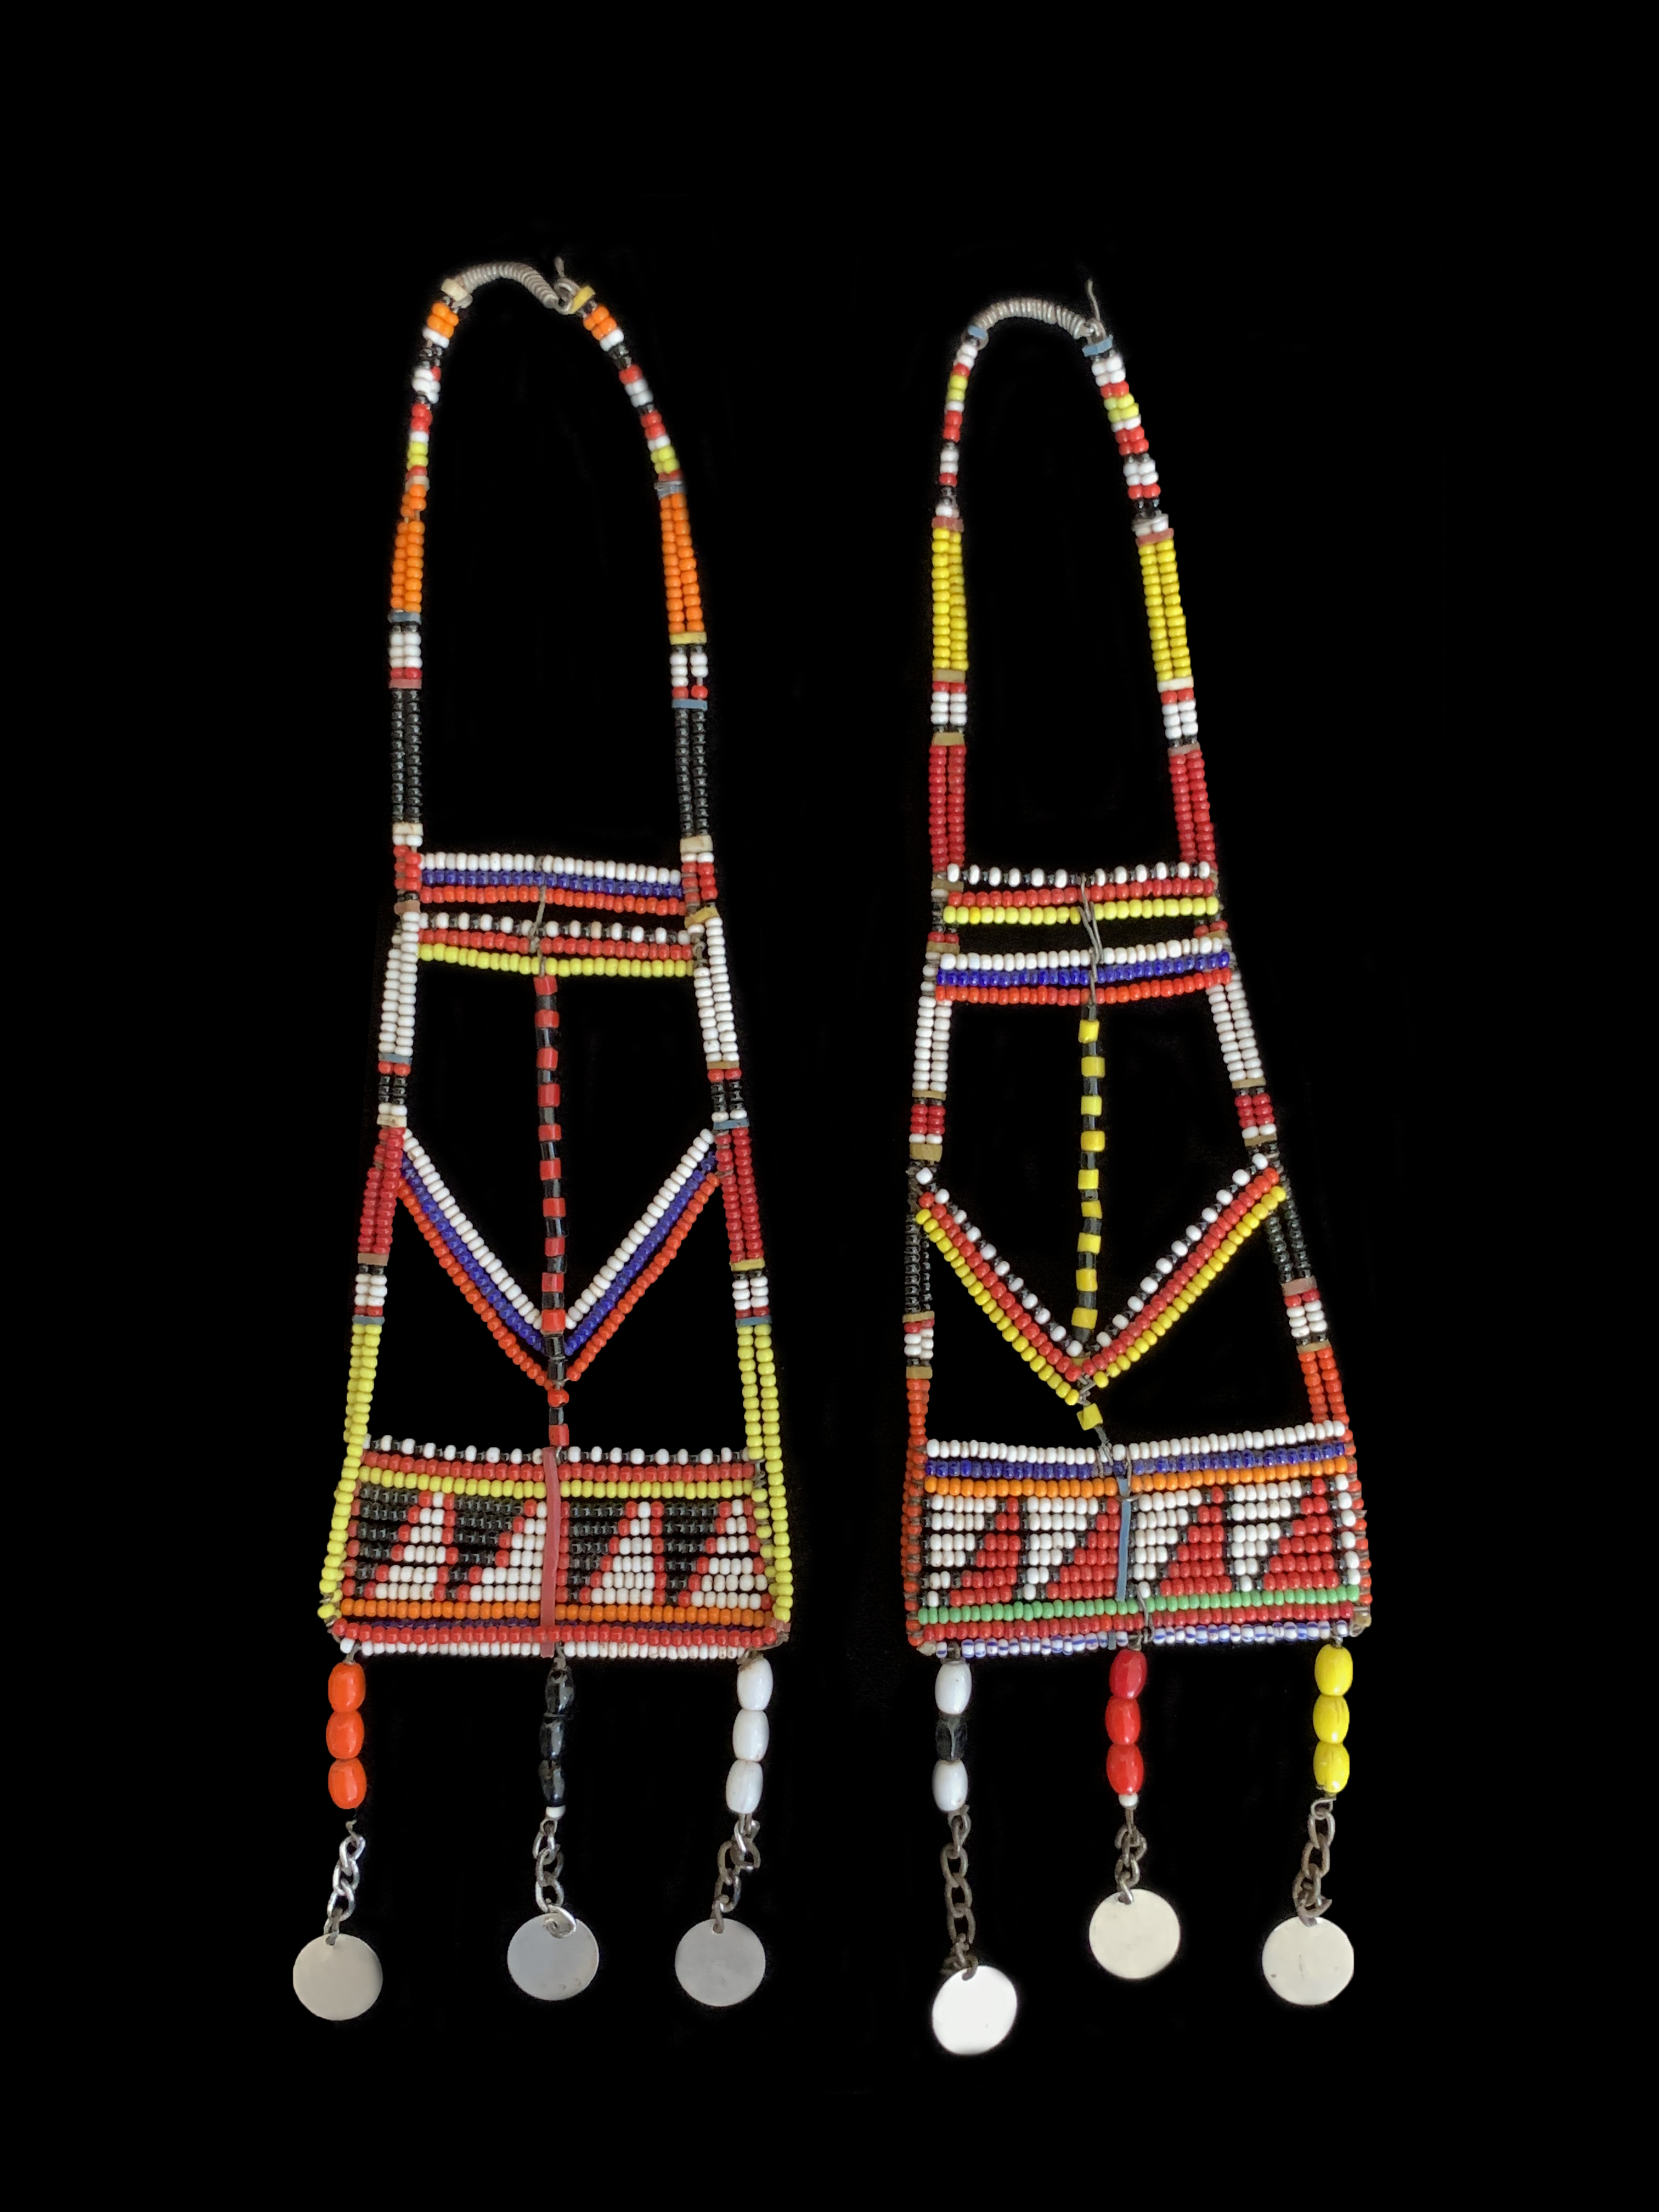 Traditional Earrings, or Imuna - Maasai People, east Africa